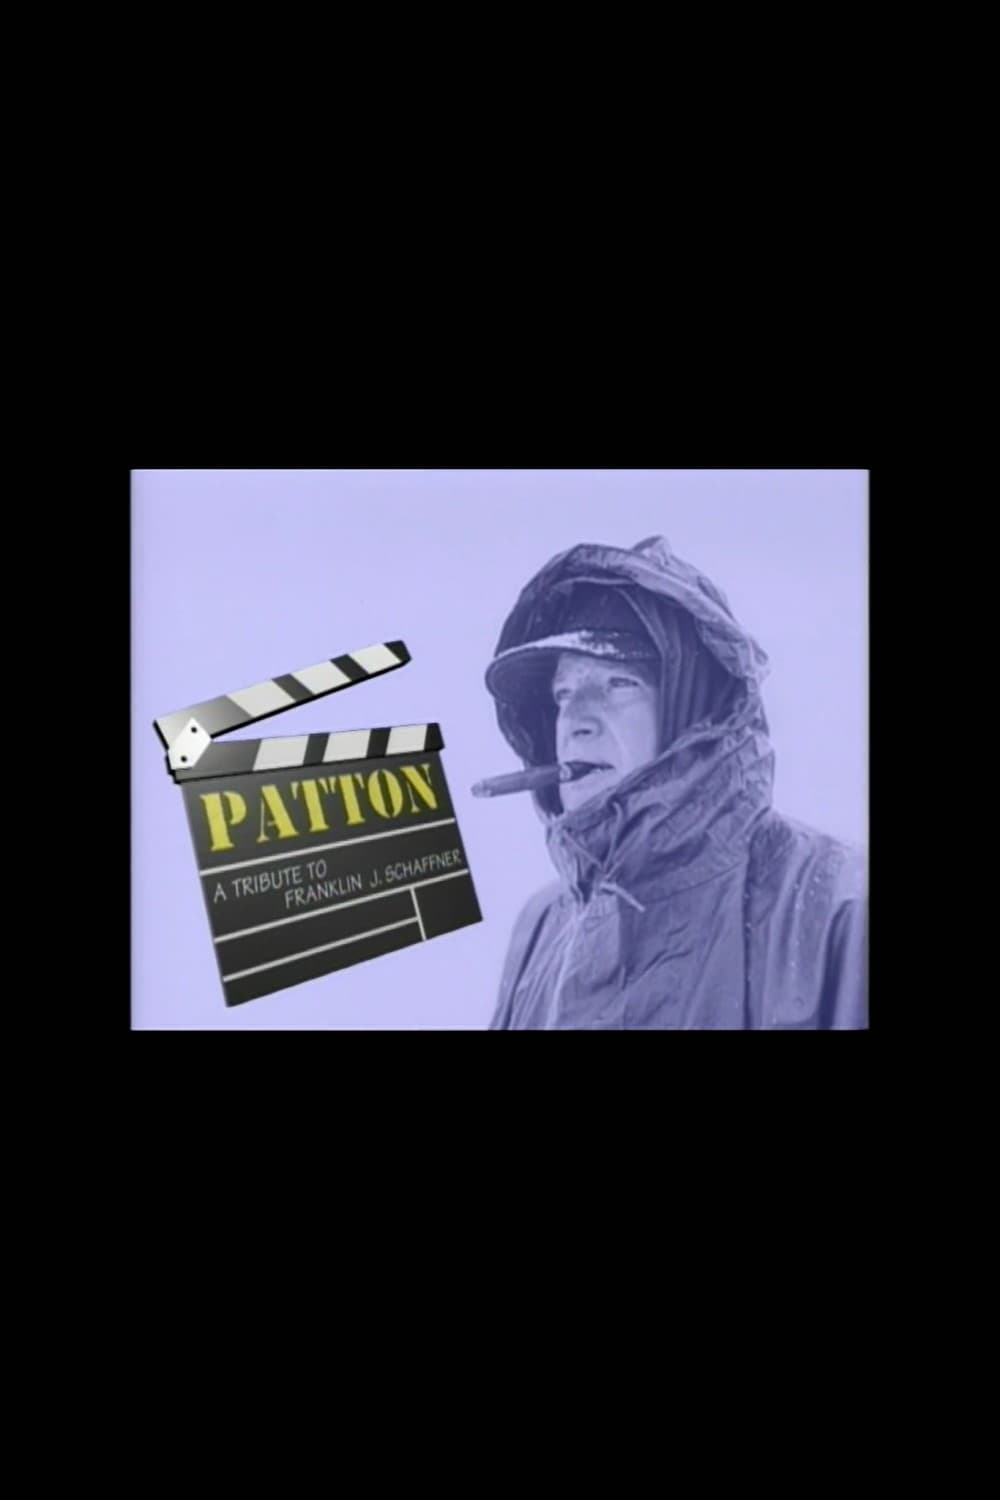 Patton: A Tribute to Franklin J. Schaffner (1997)